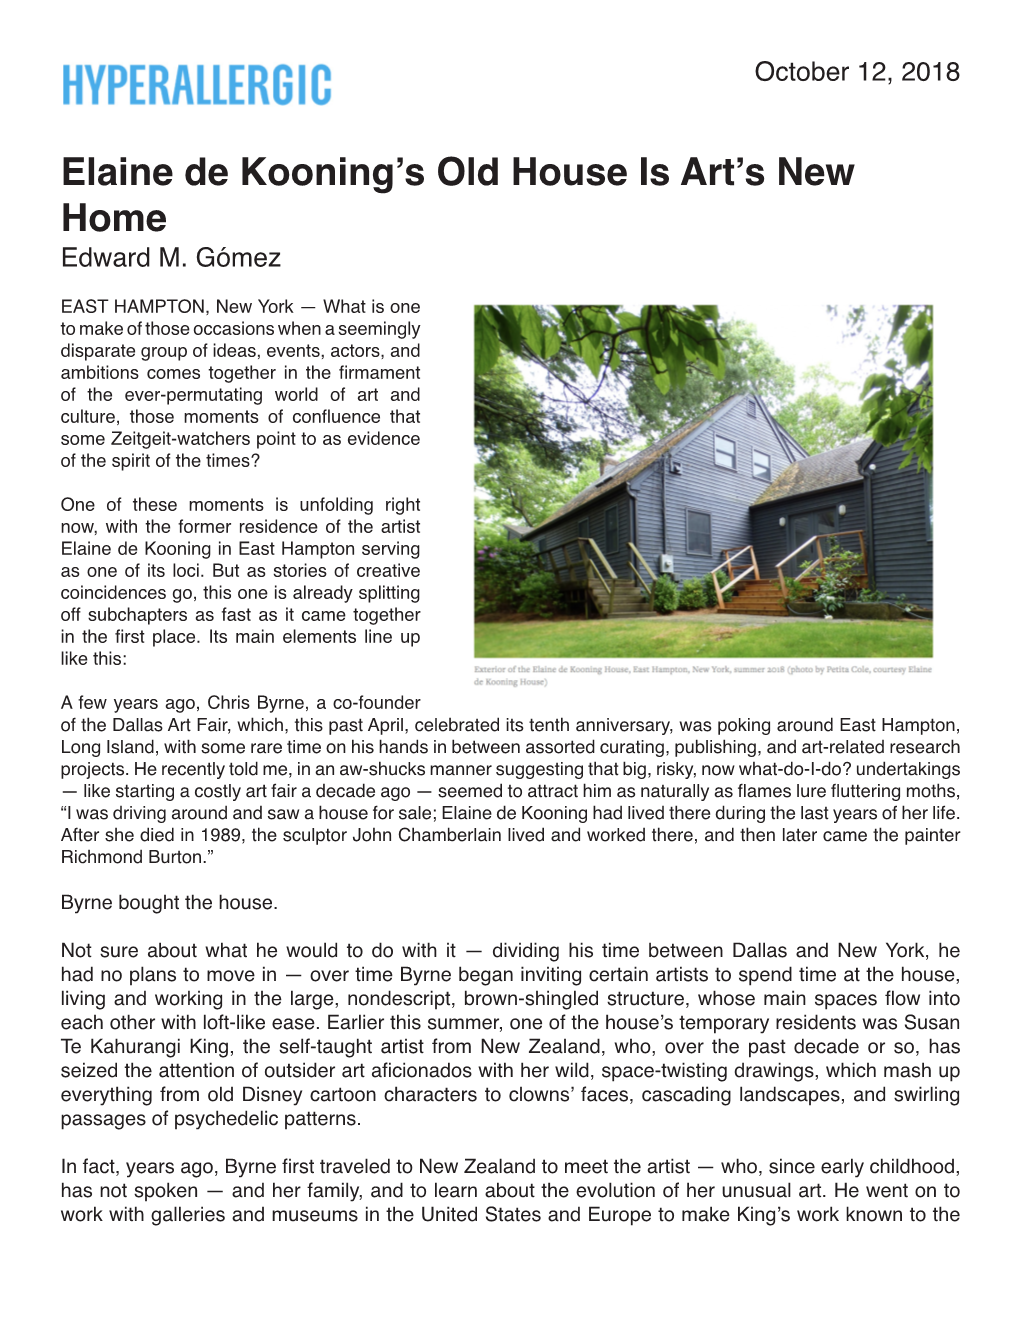 Elaine De Kooning's Old House Is Art's New Home